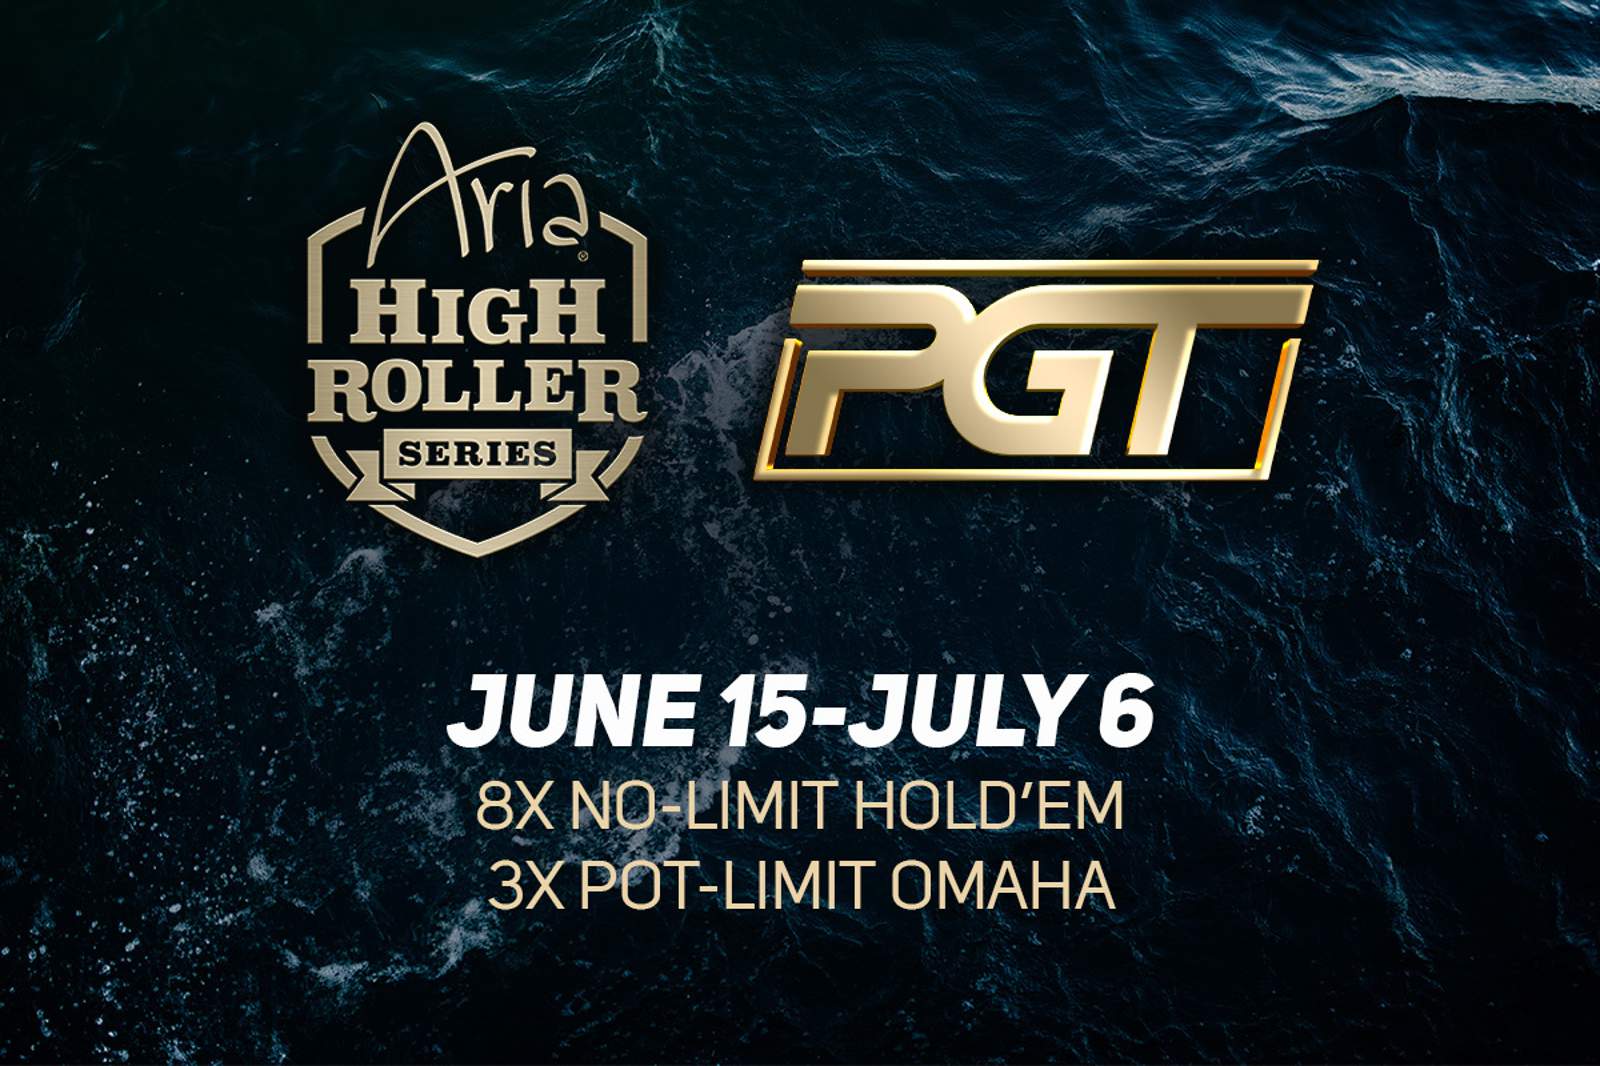 ARIA High Roller Series Schedule: June 15 - July 6